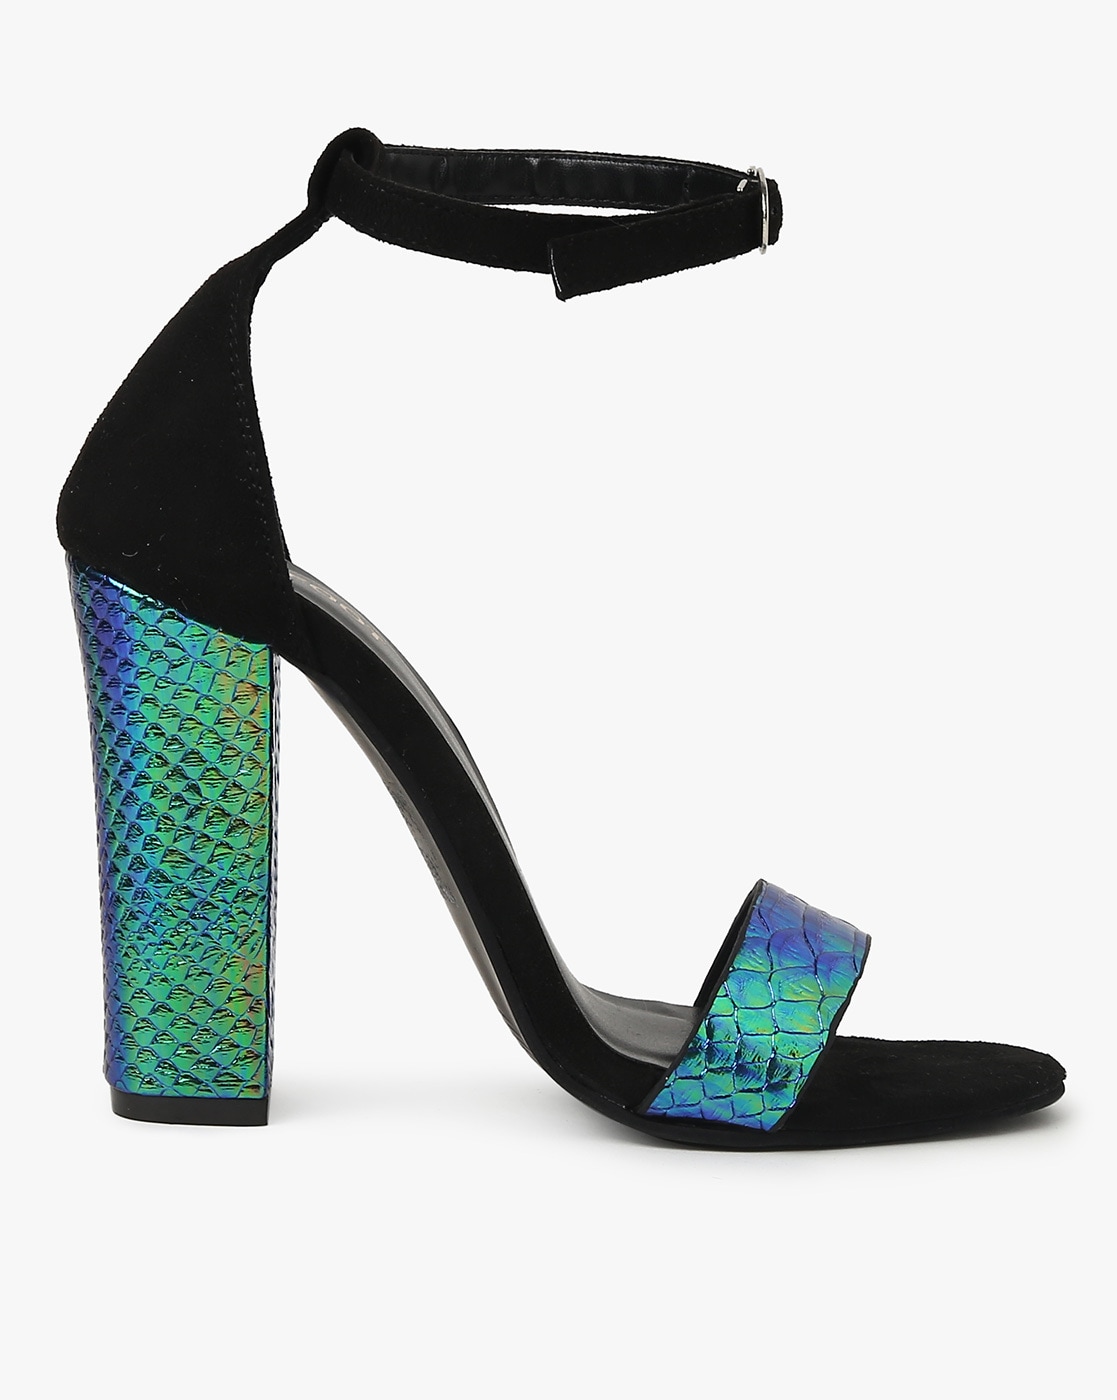 Hologram Platform Women's Shoes